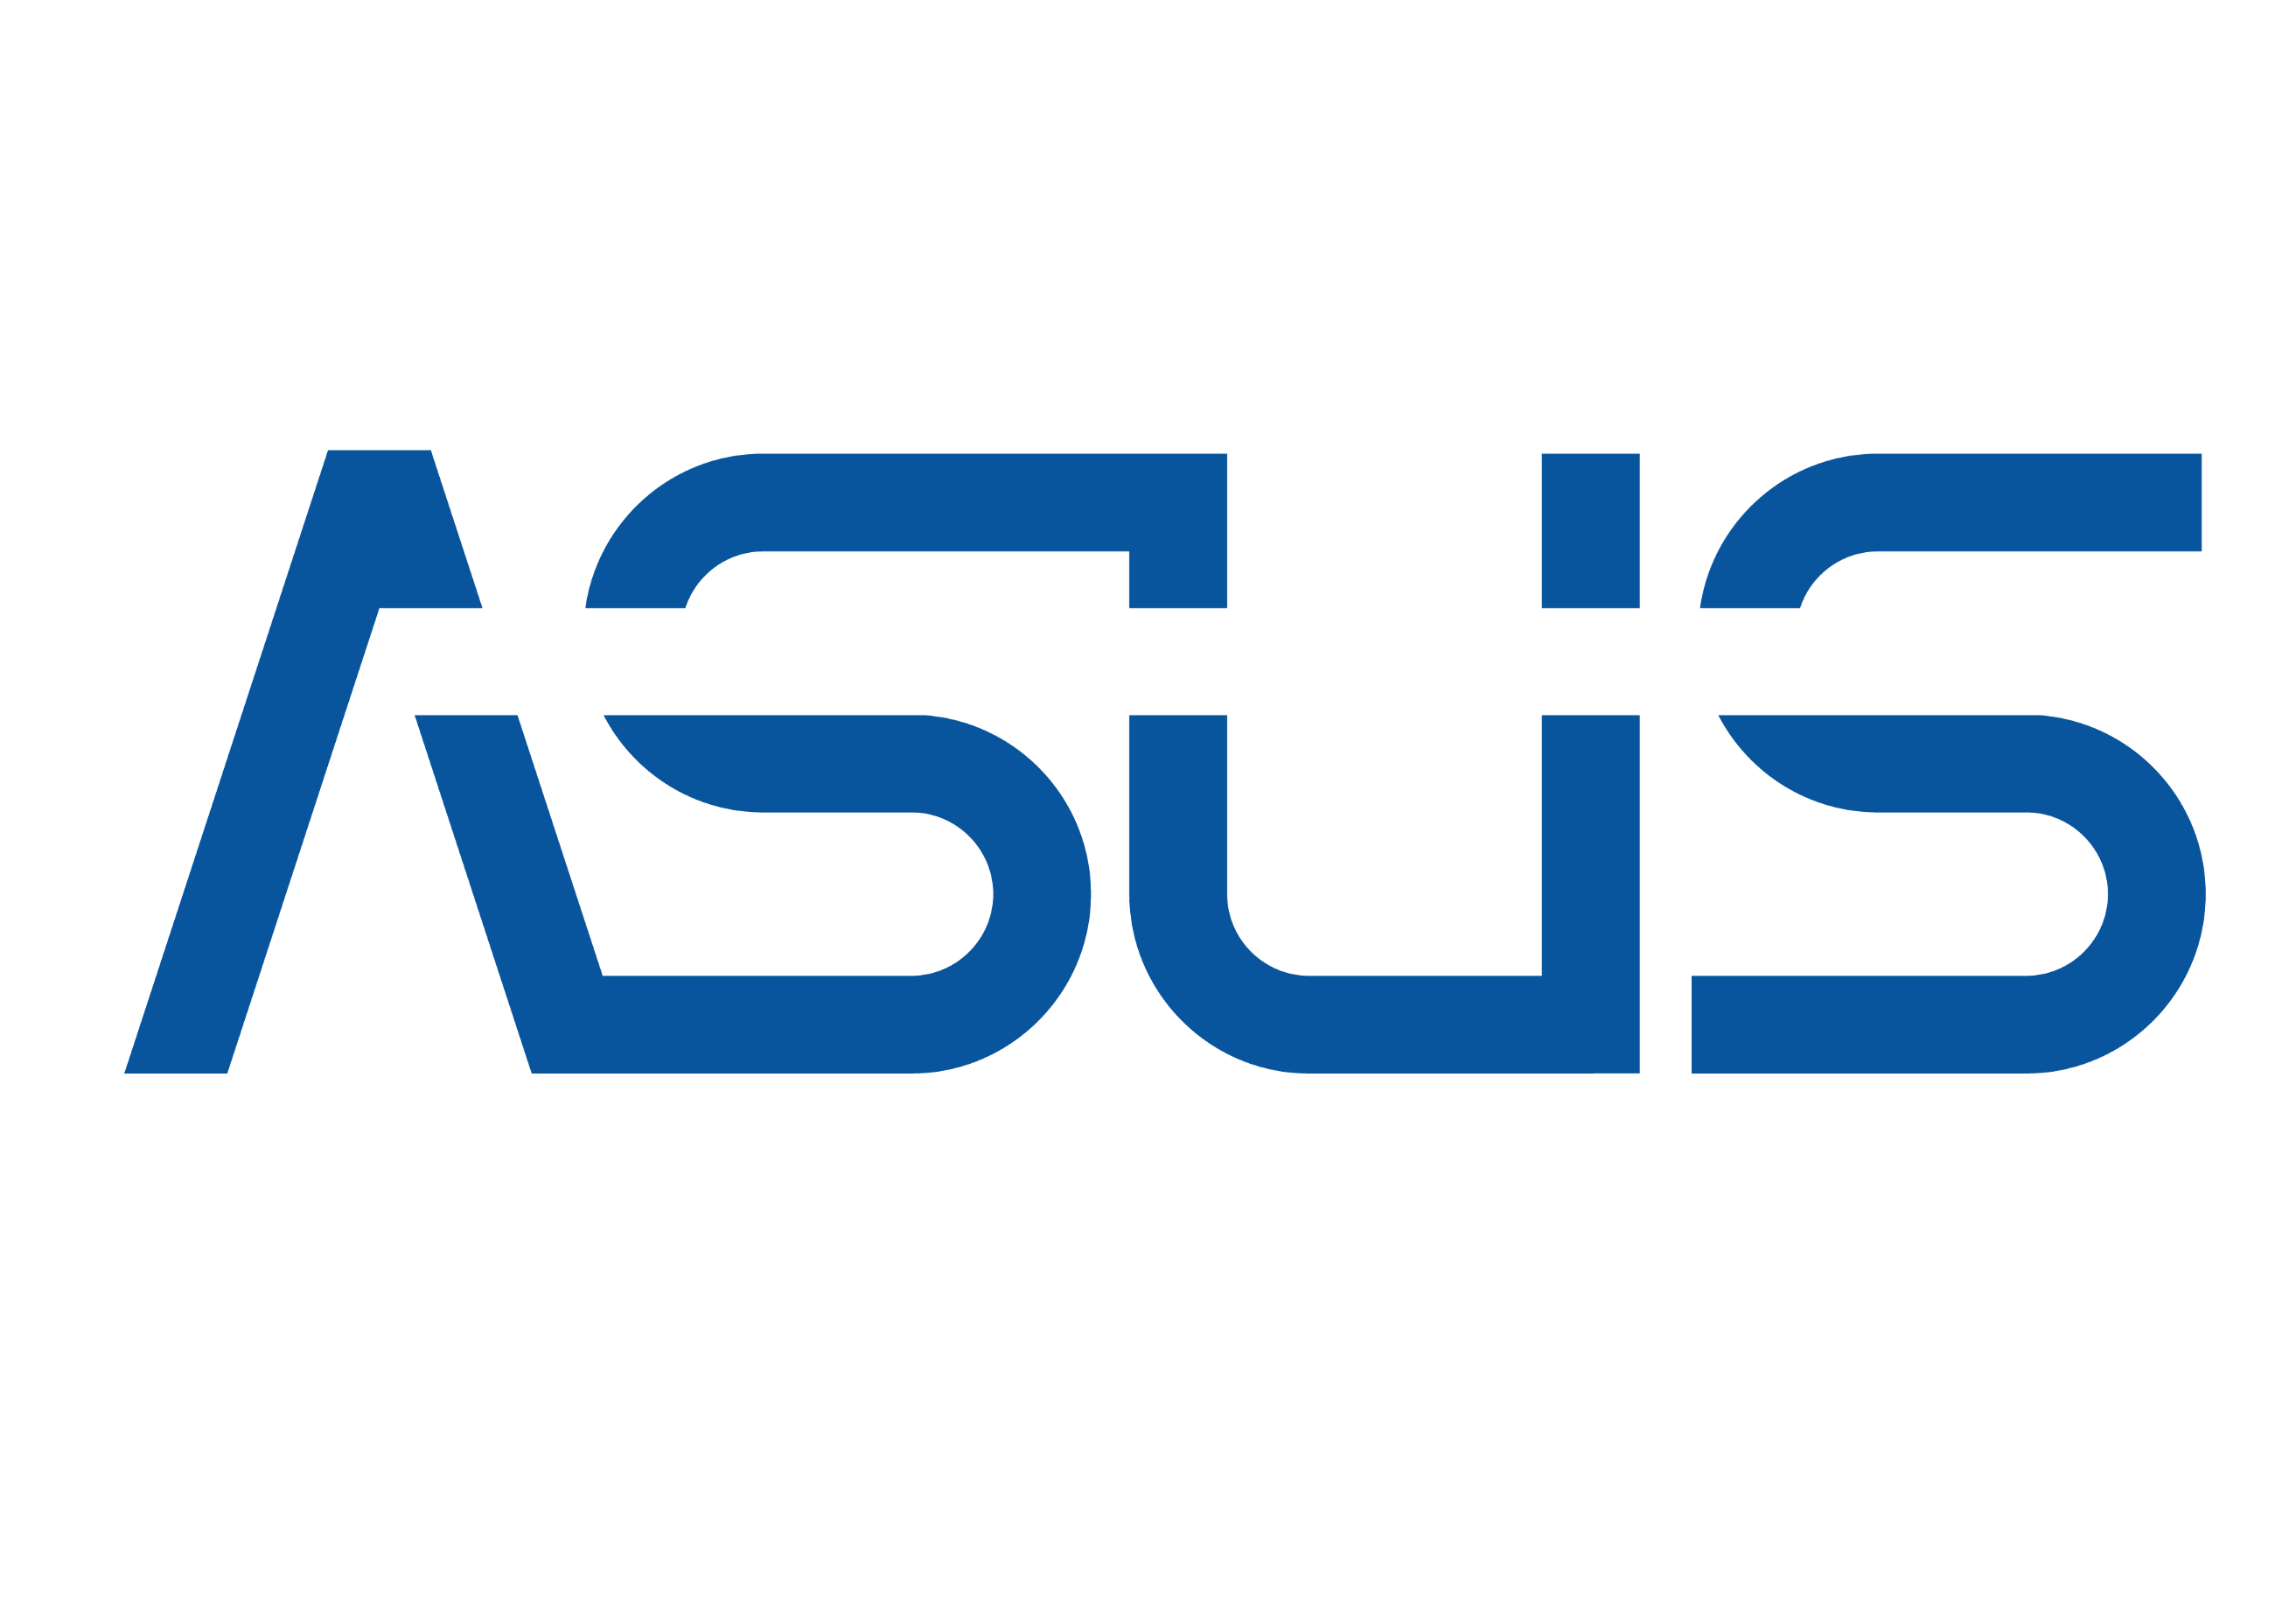 Few Logo - Fixing the ASUS Logo - Raden Yunos - Medium